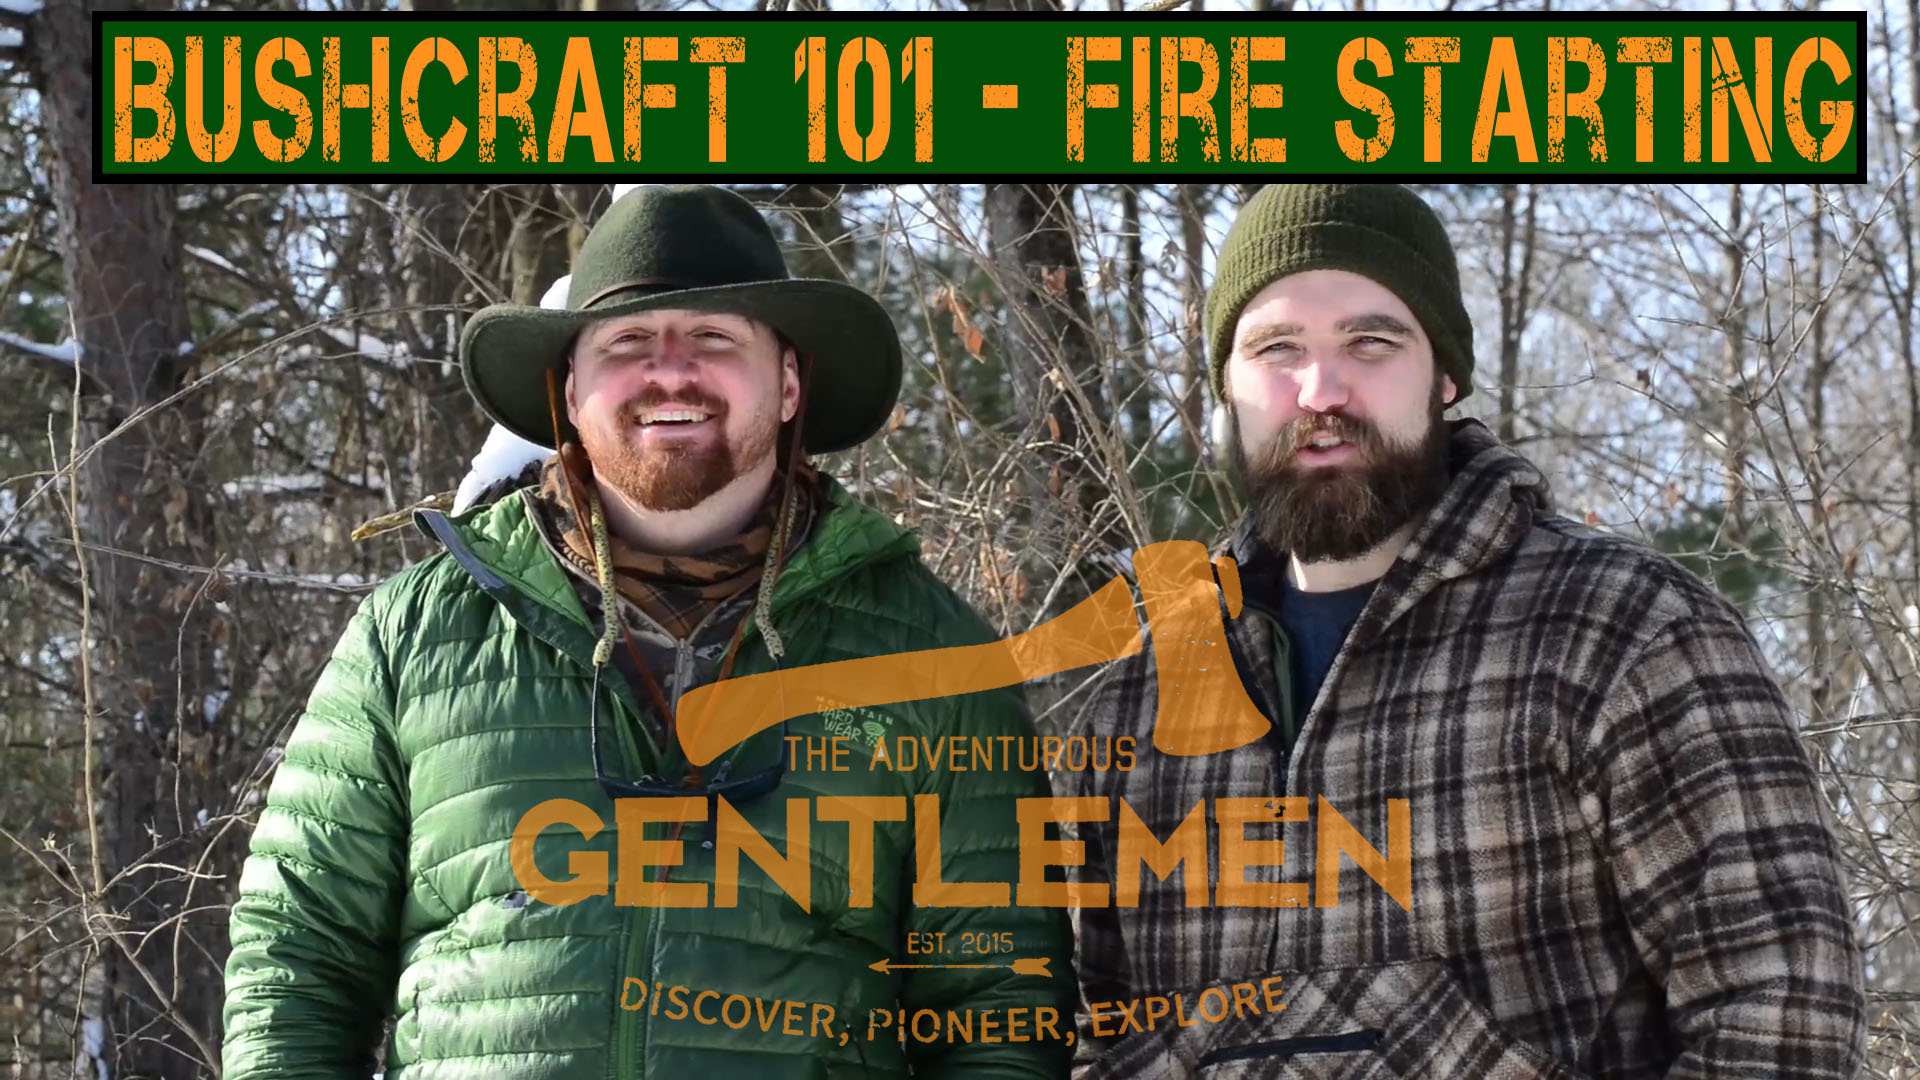 Bushcraft 101 - Fire Starting - The Adventurous Gentlemen 